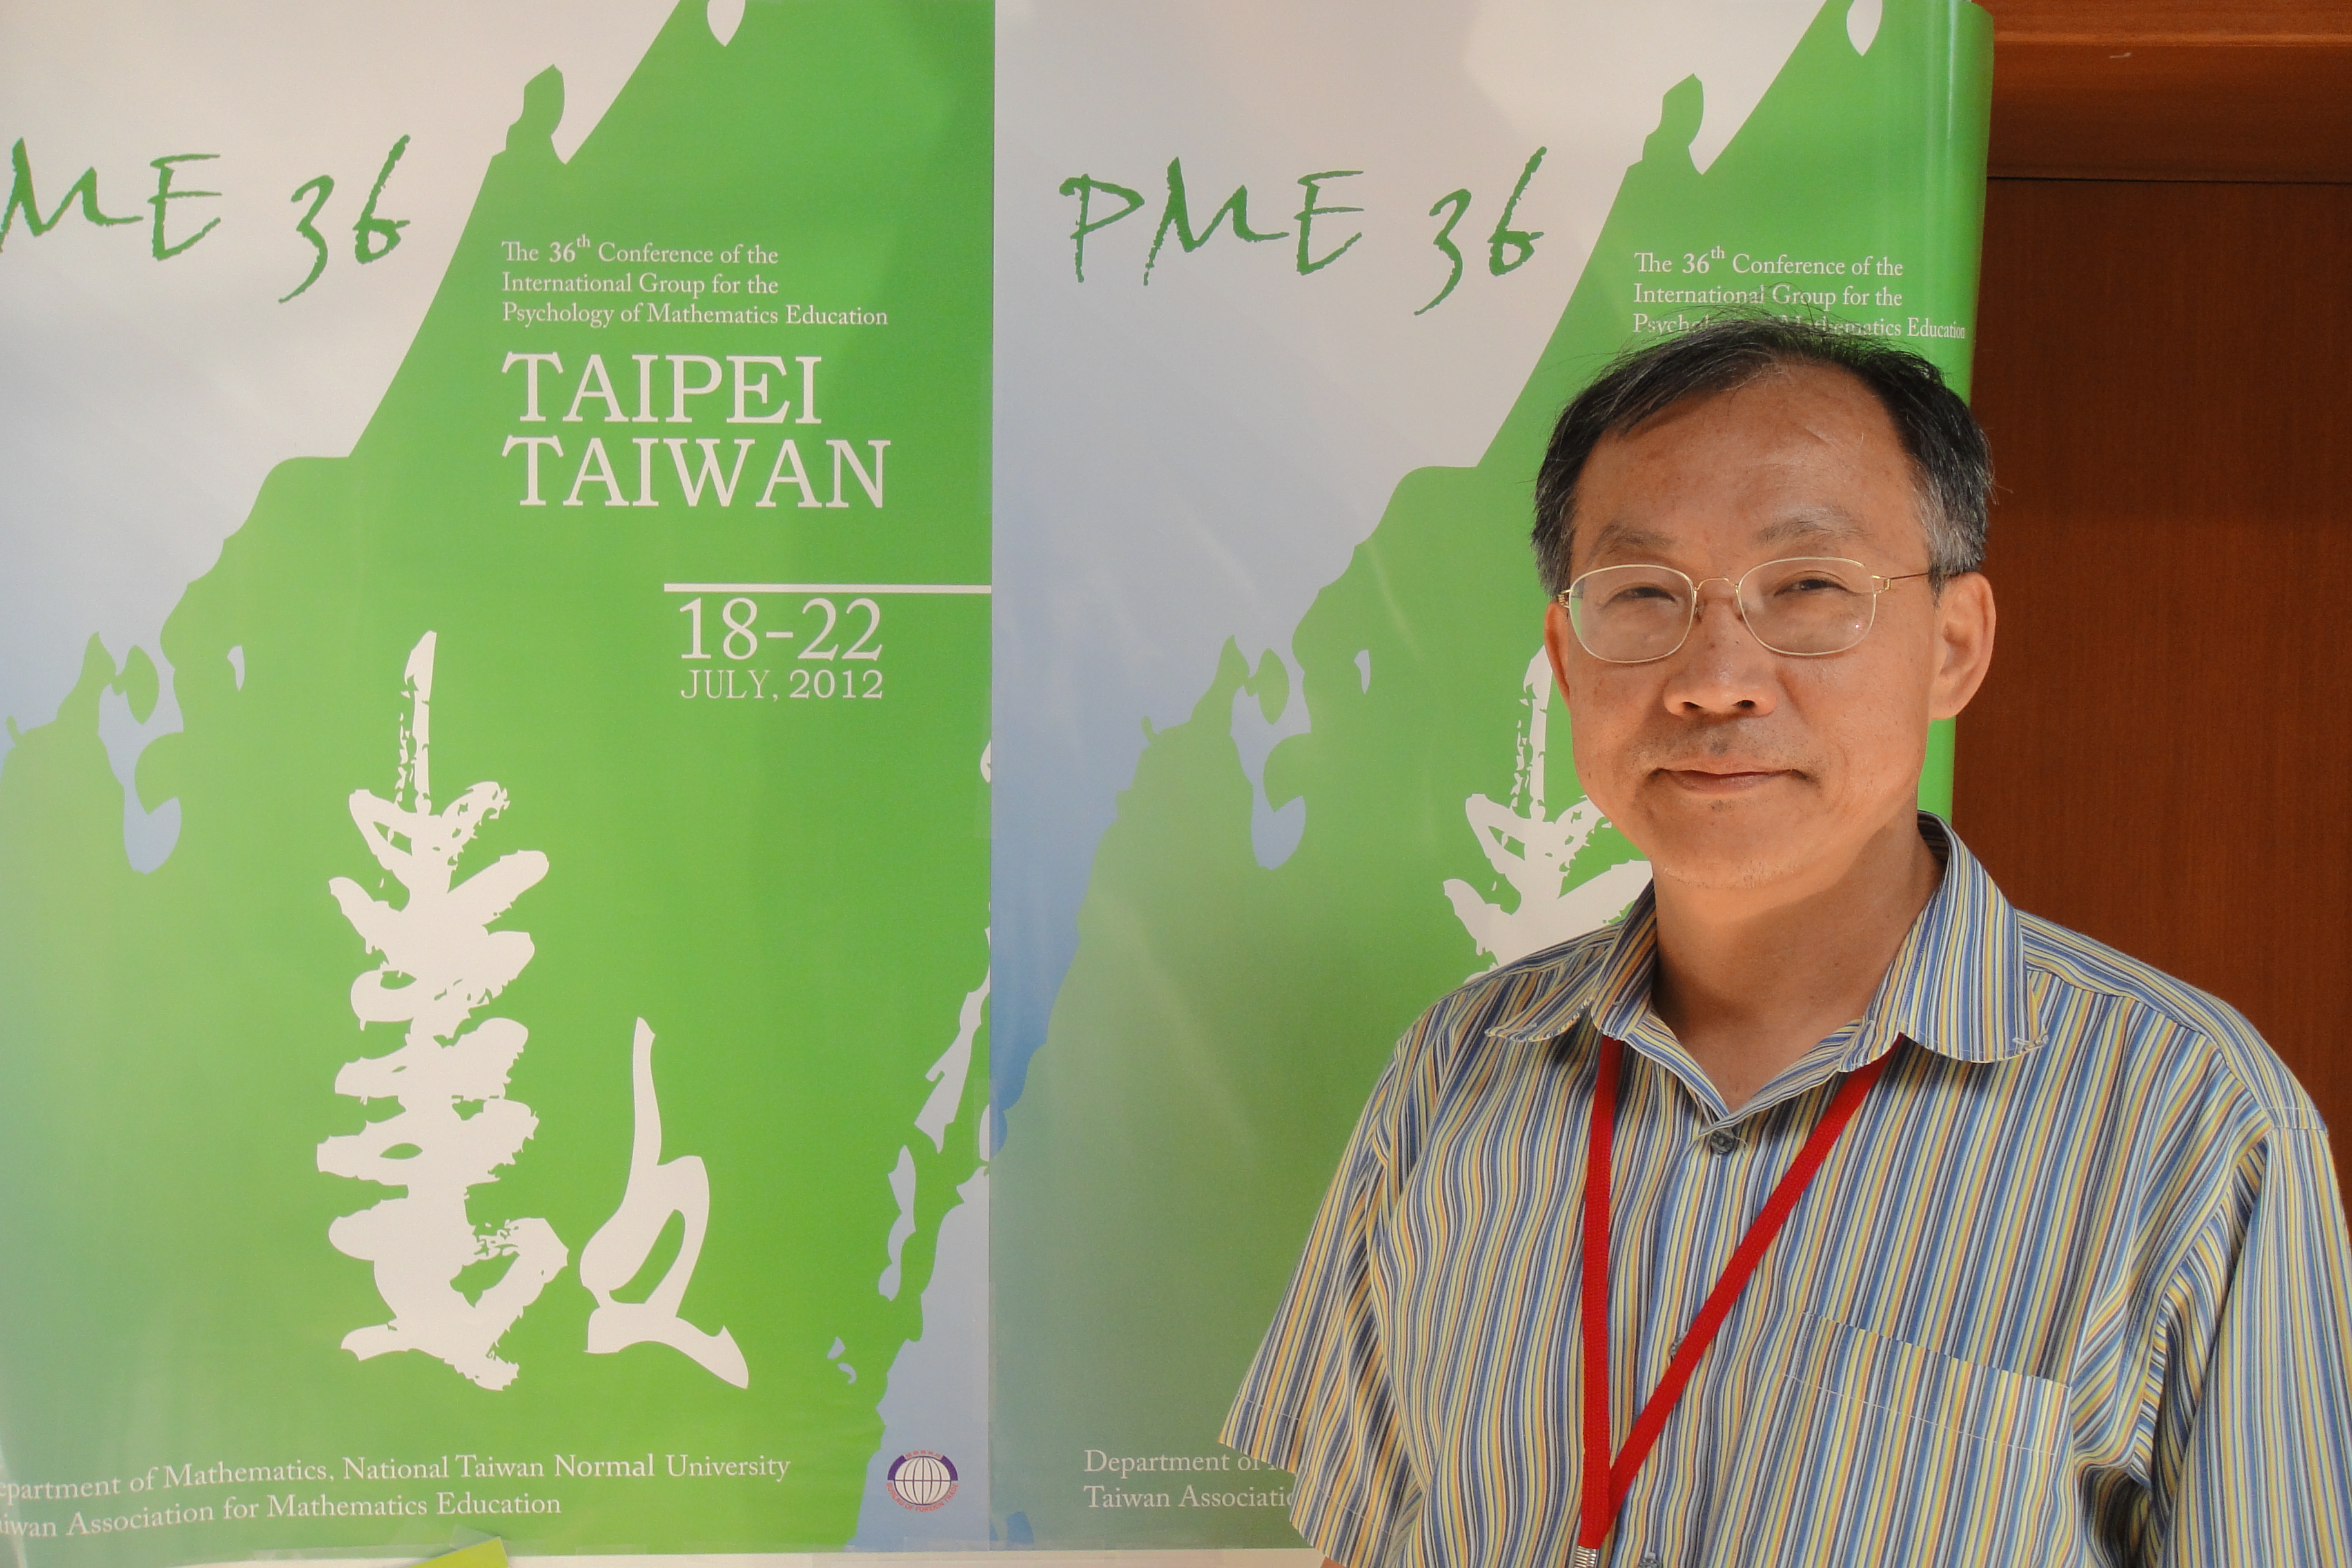 Dr. Tai-Yih Tso